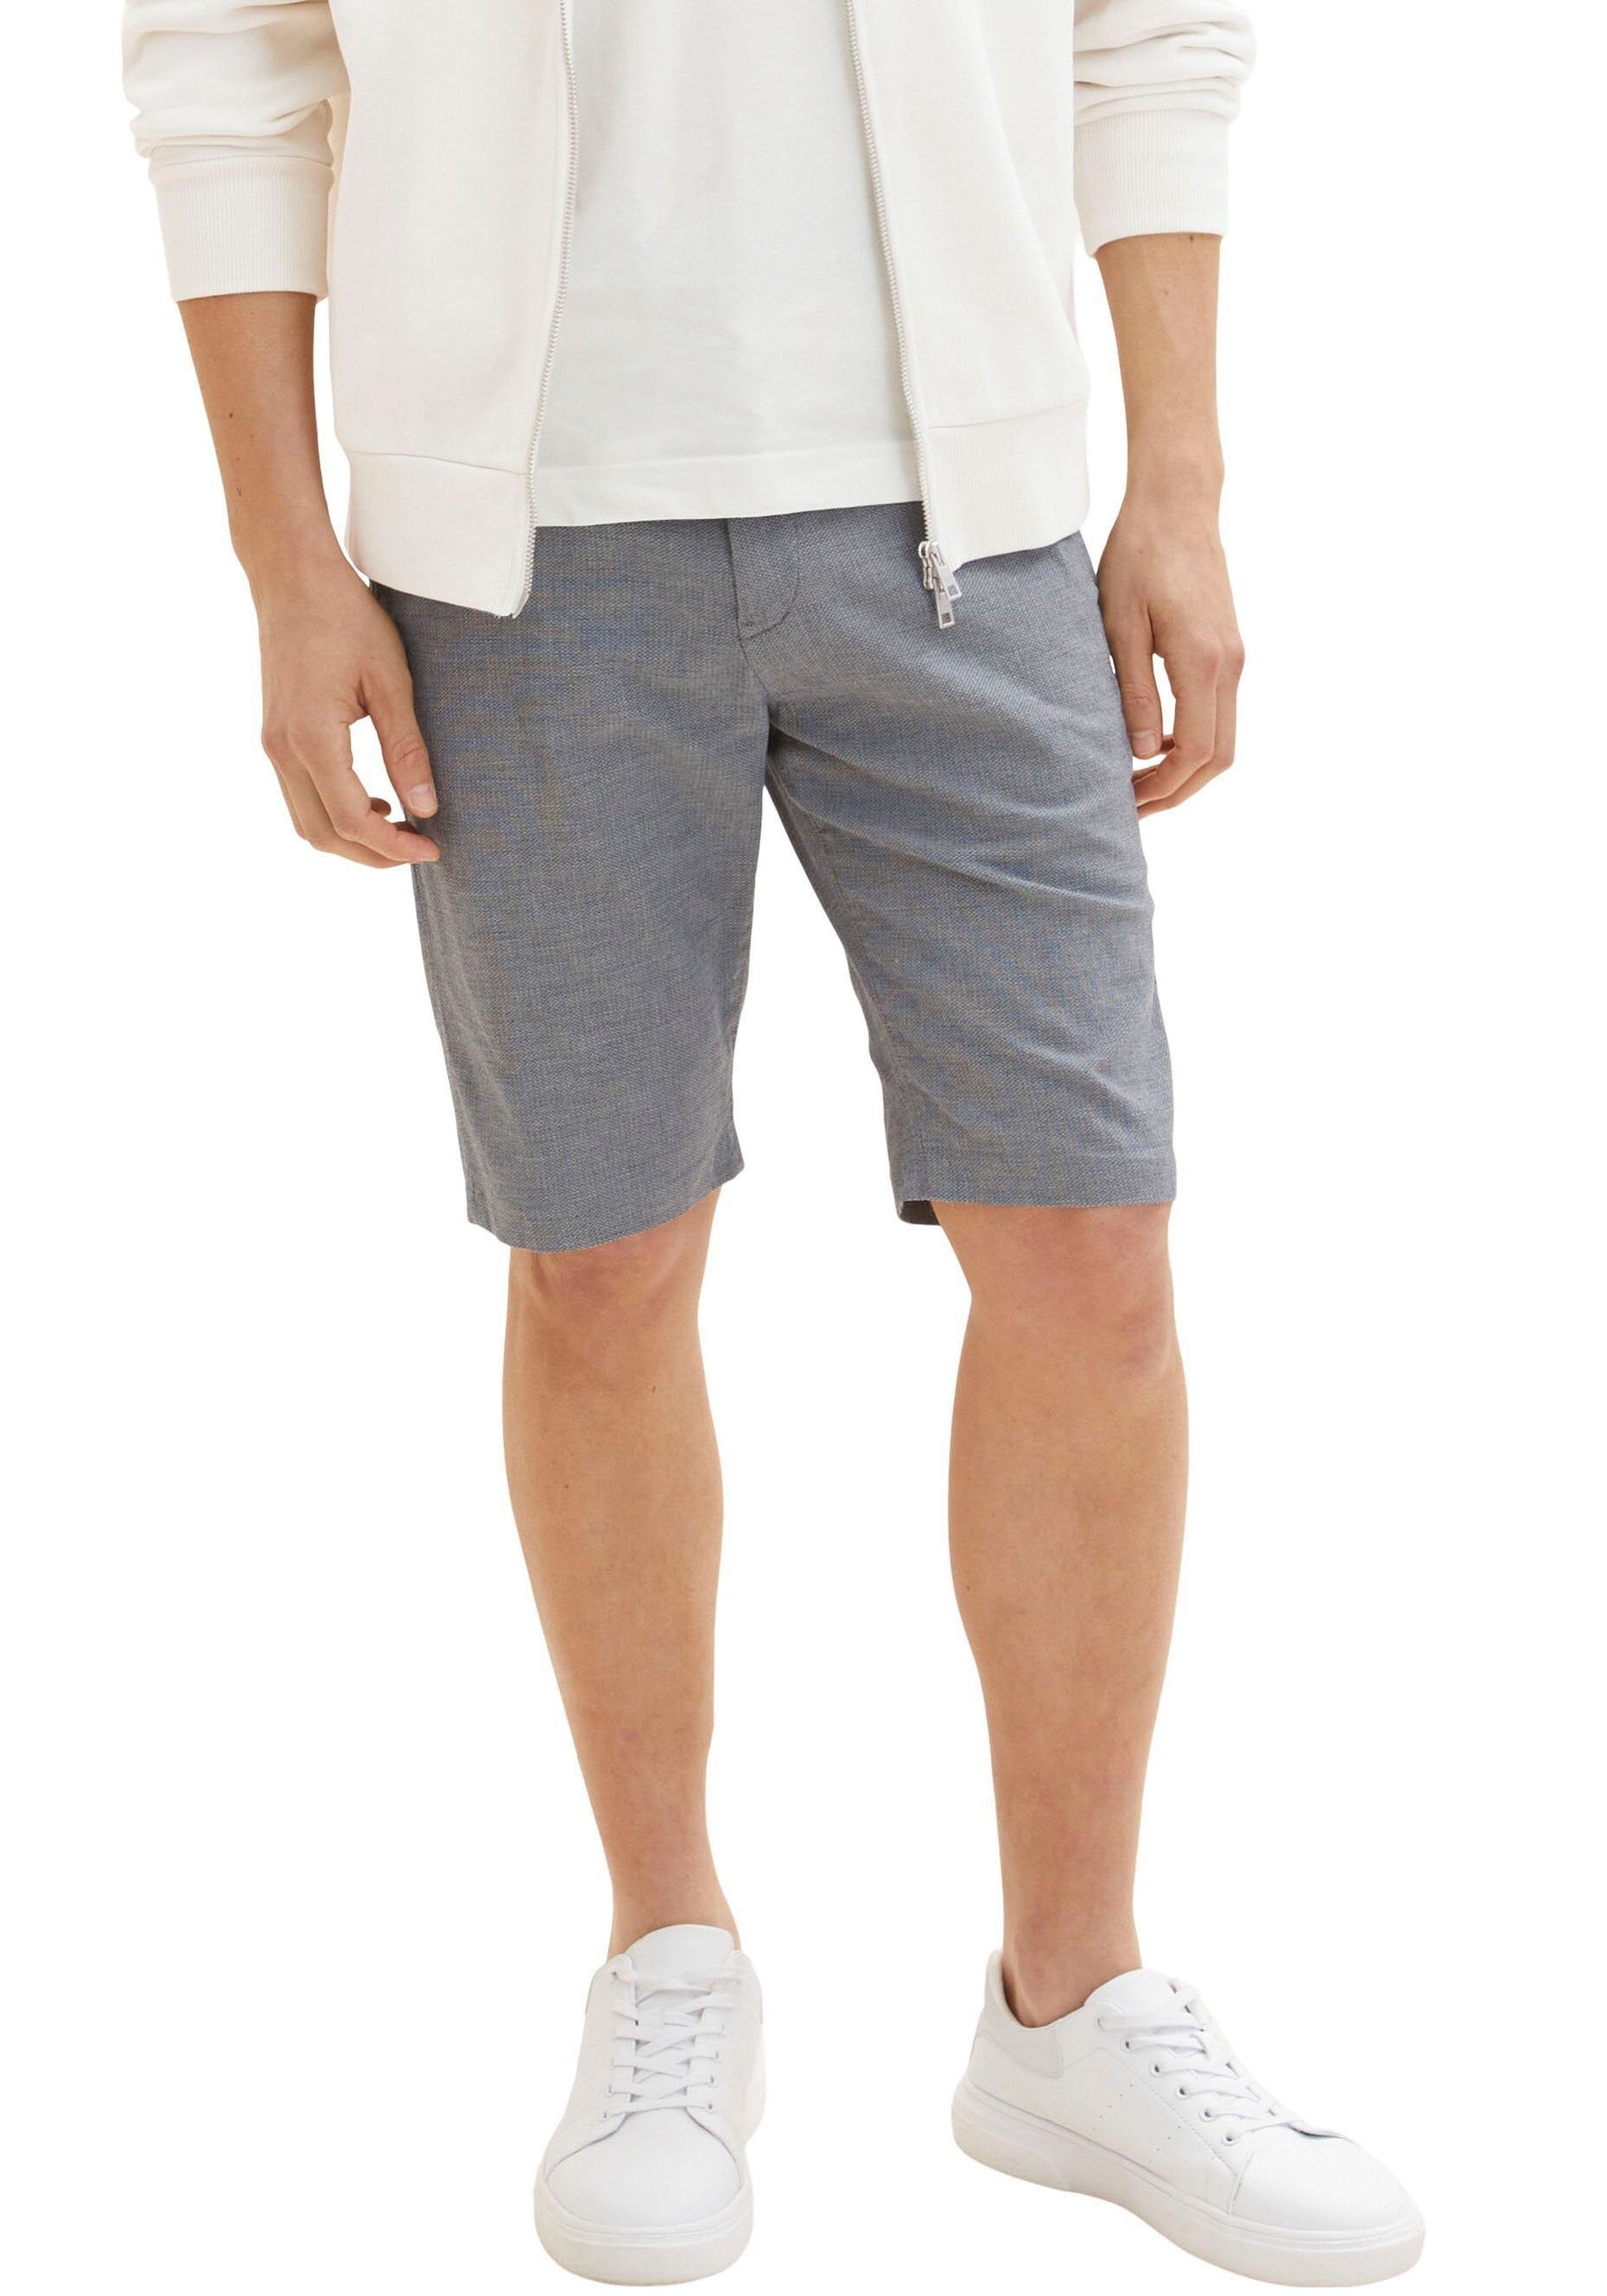 TOM TAILOR Shorts navy white | Shorts